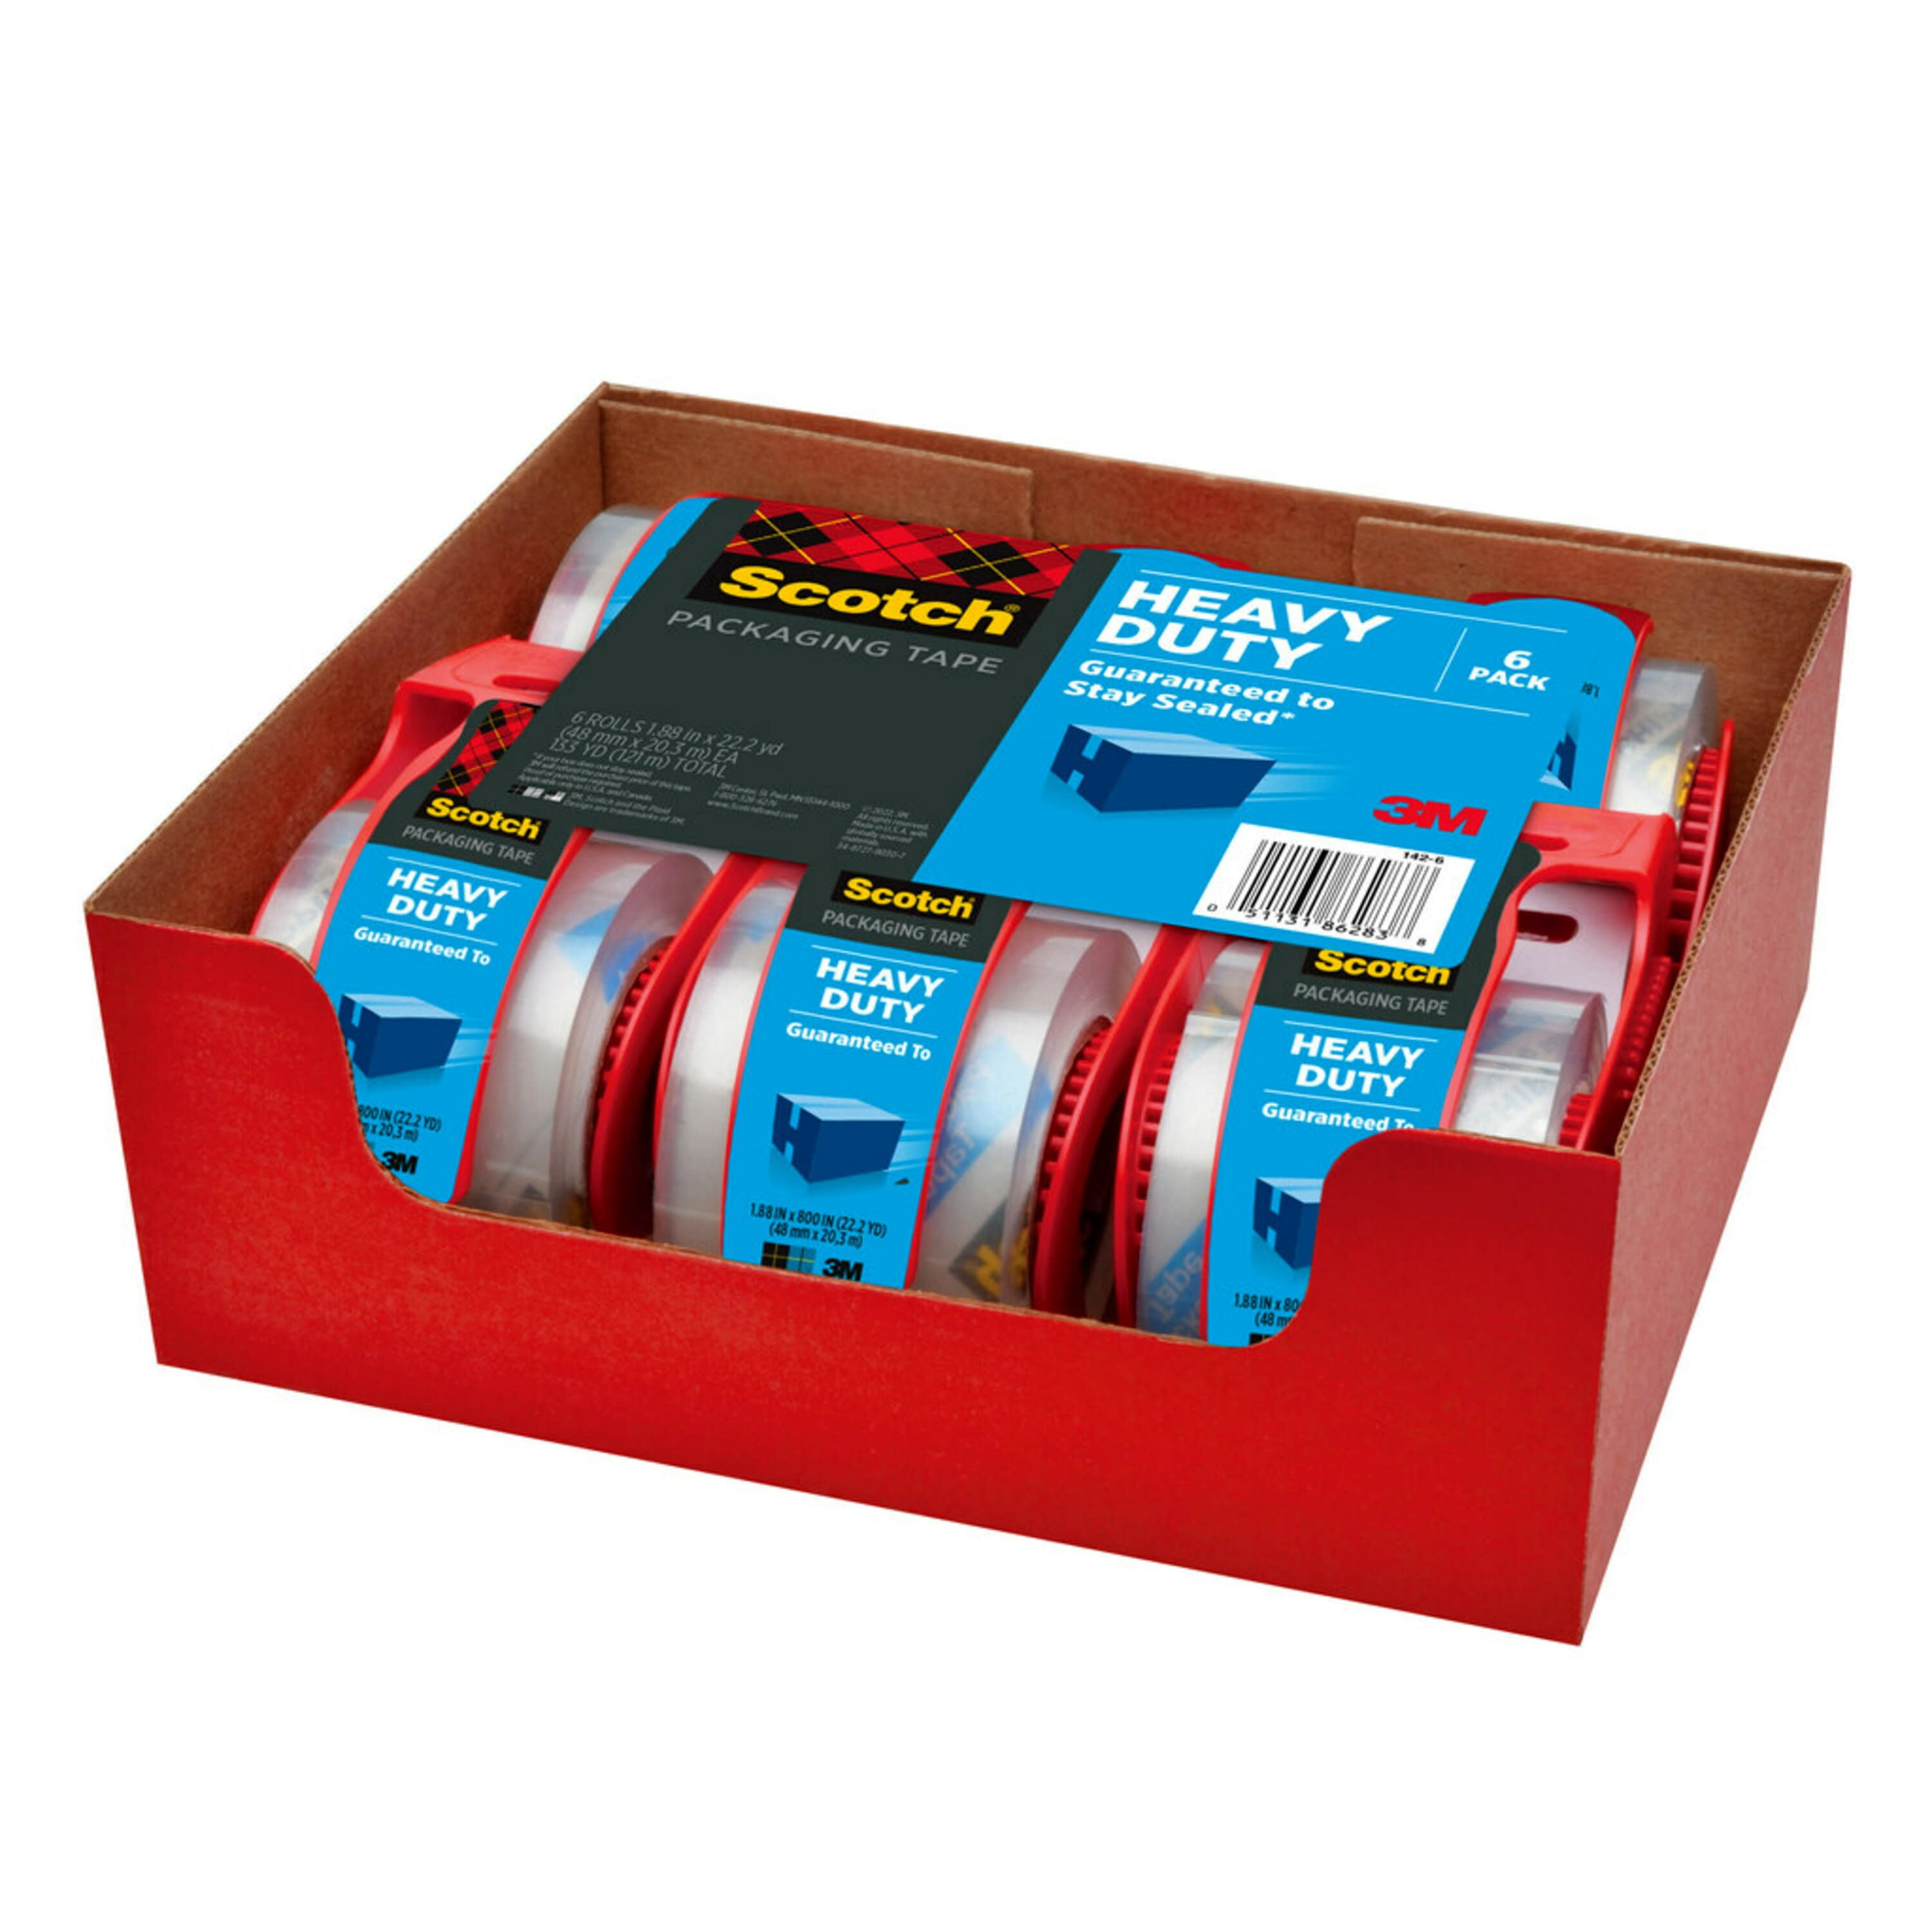 Scotch® Heavy Duty Shipping Packaging Tape - Tan, 1.88 in x 22.2